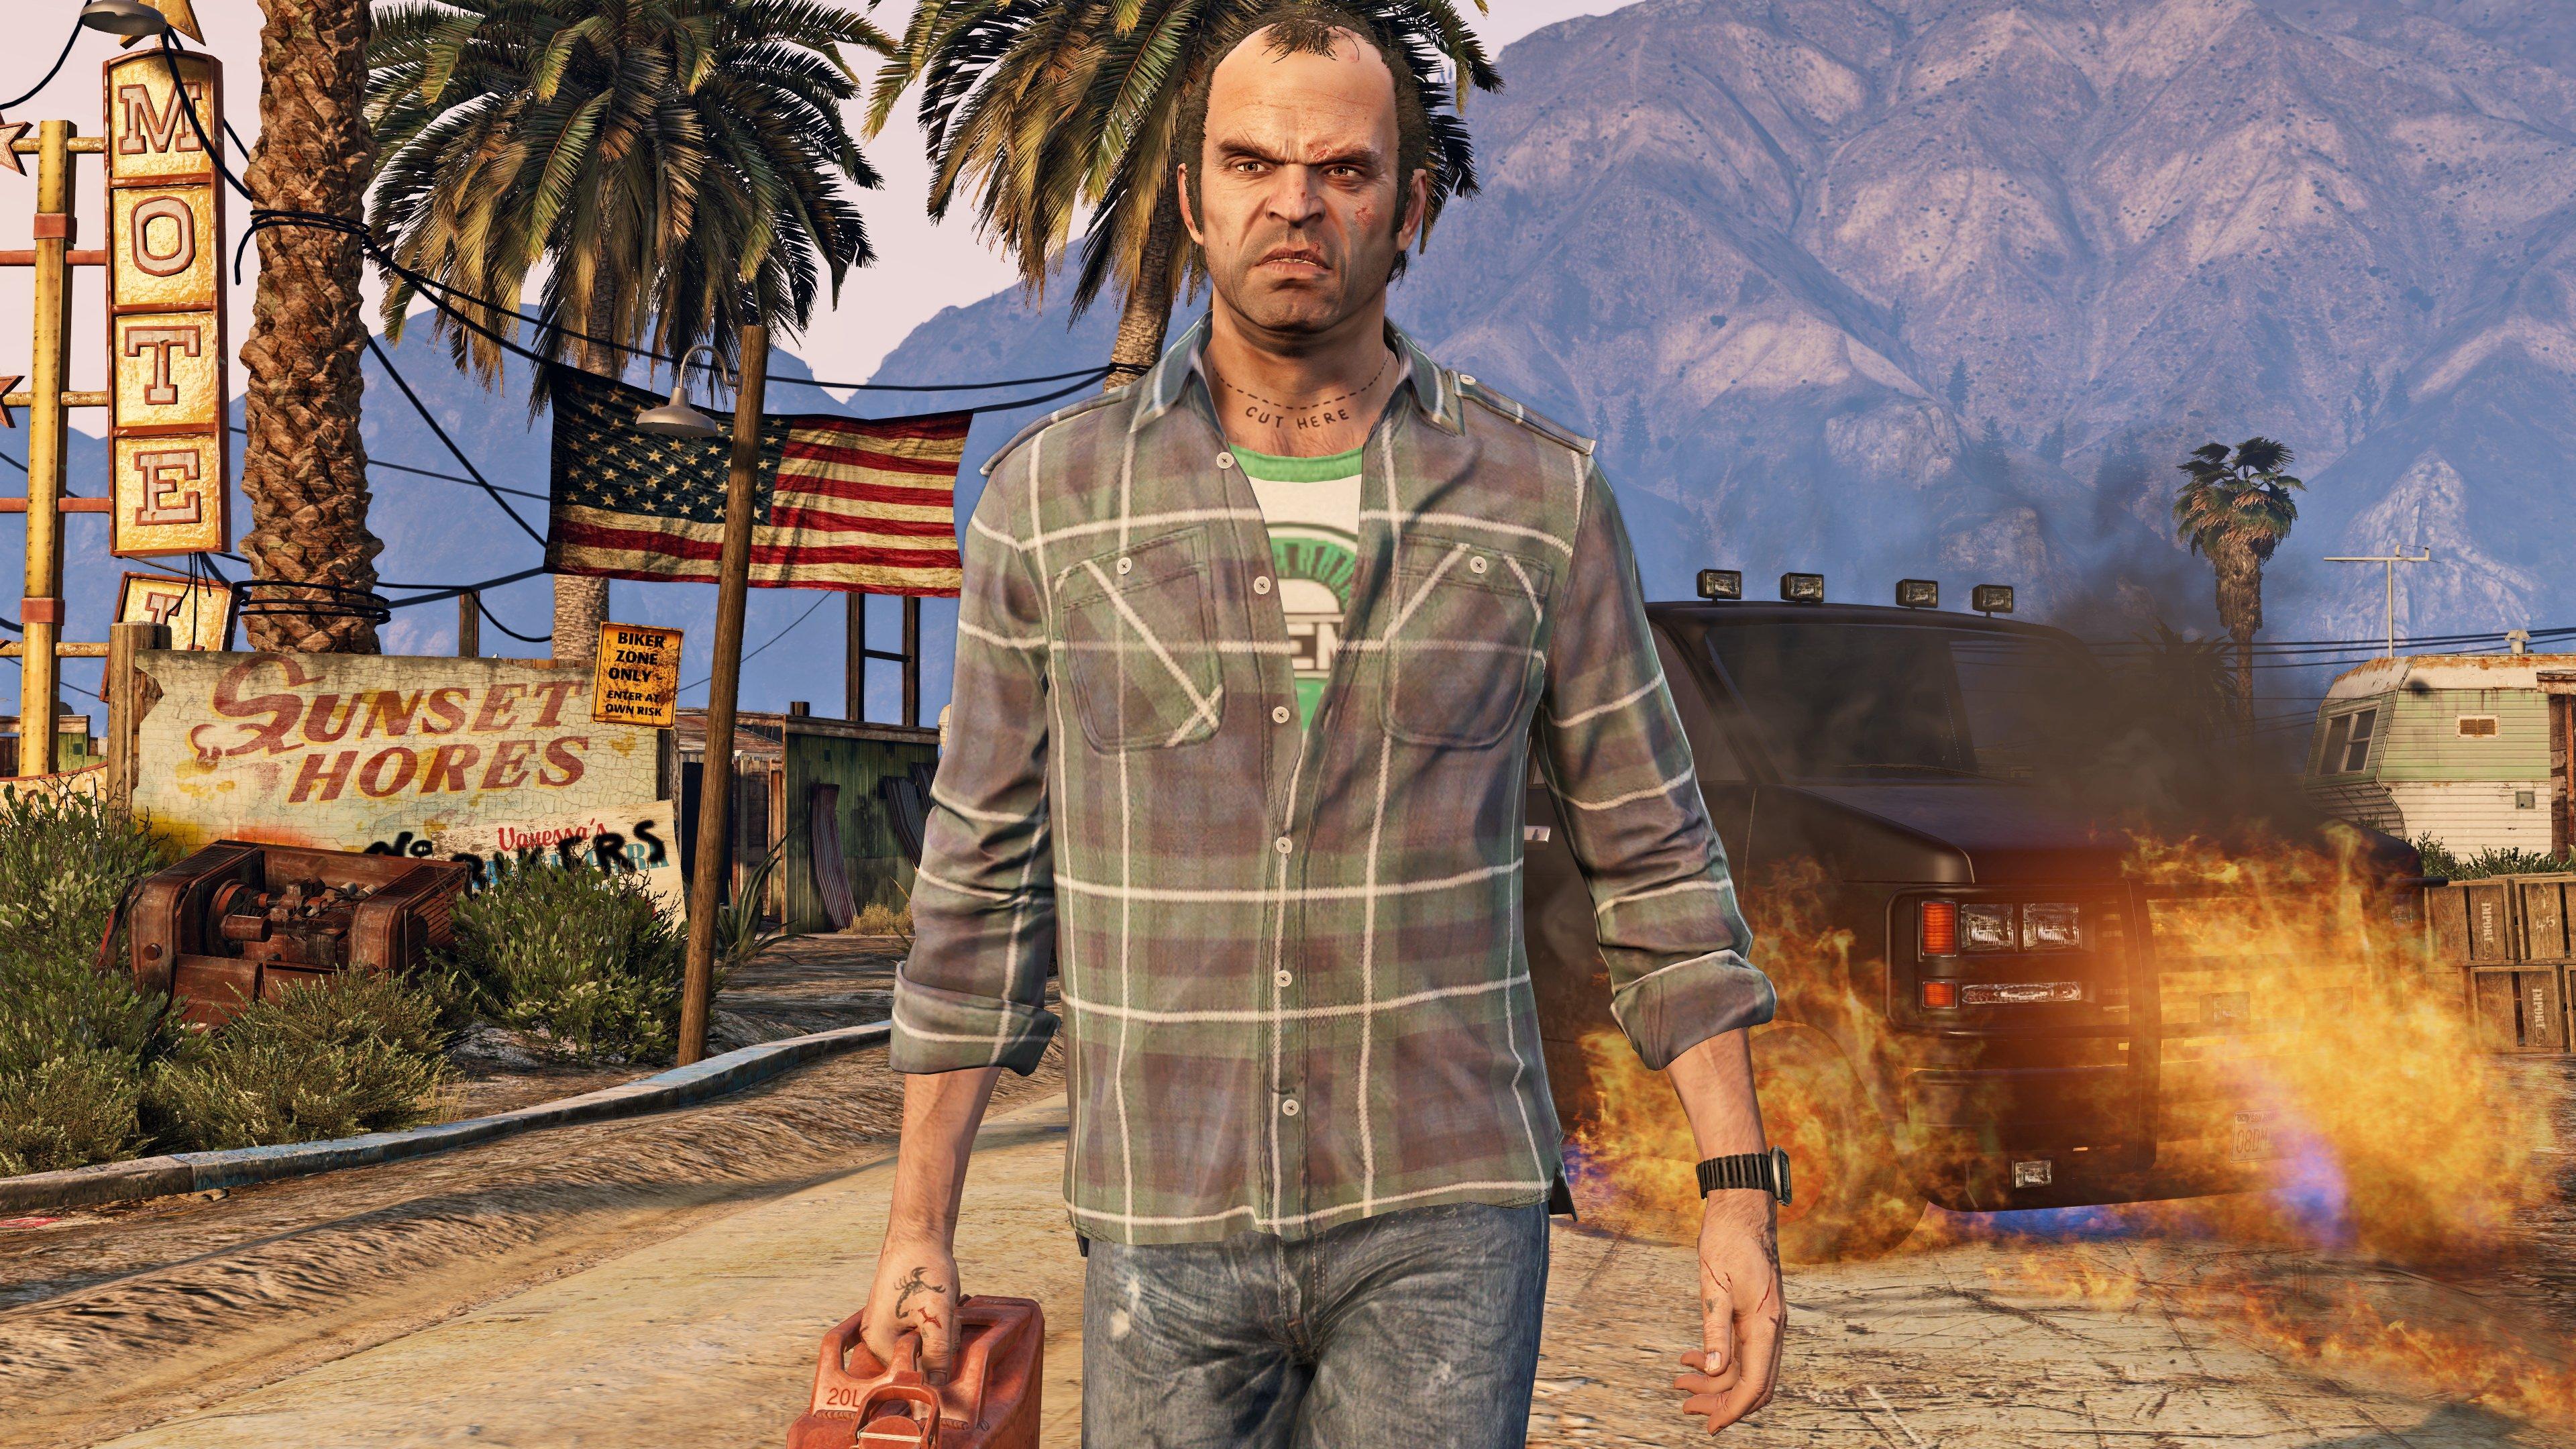 Grand Theft Auto V (GTA 5) Premium Edition-ps4 - ROCKSTAR GAMES